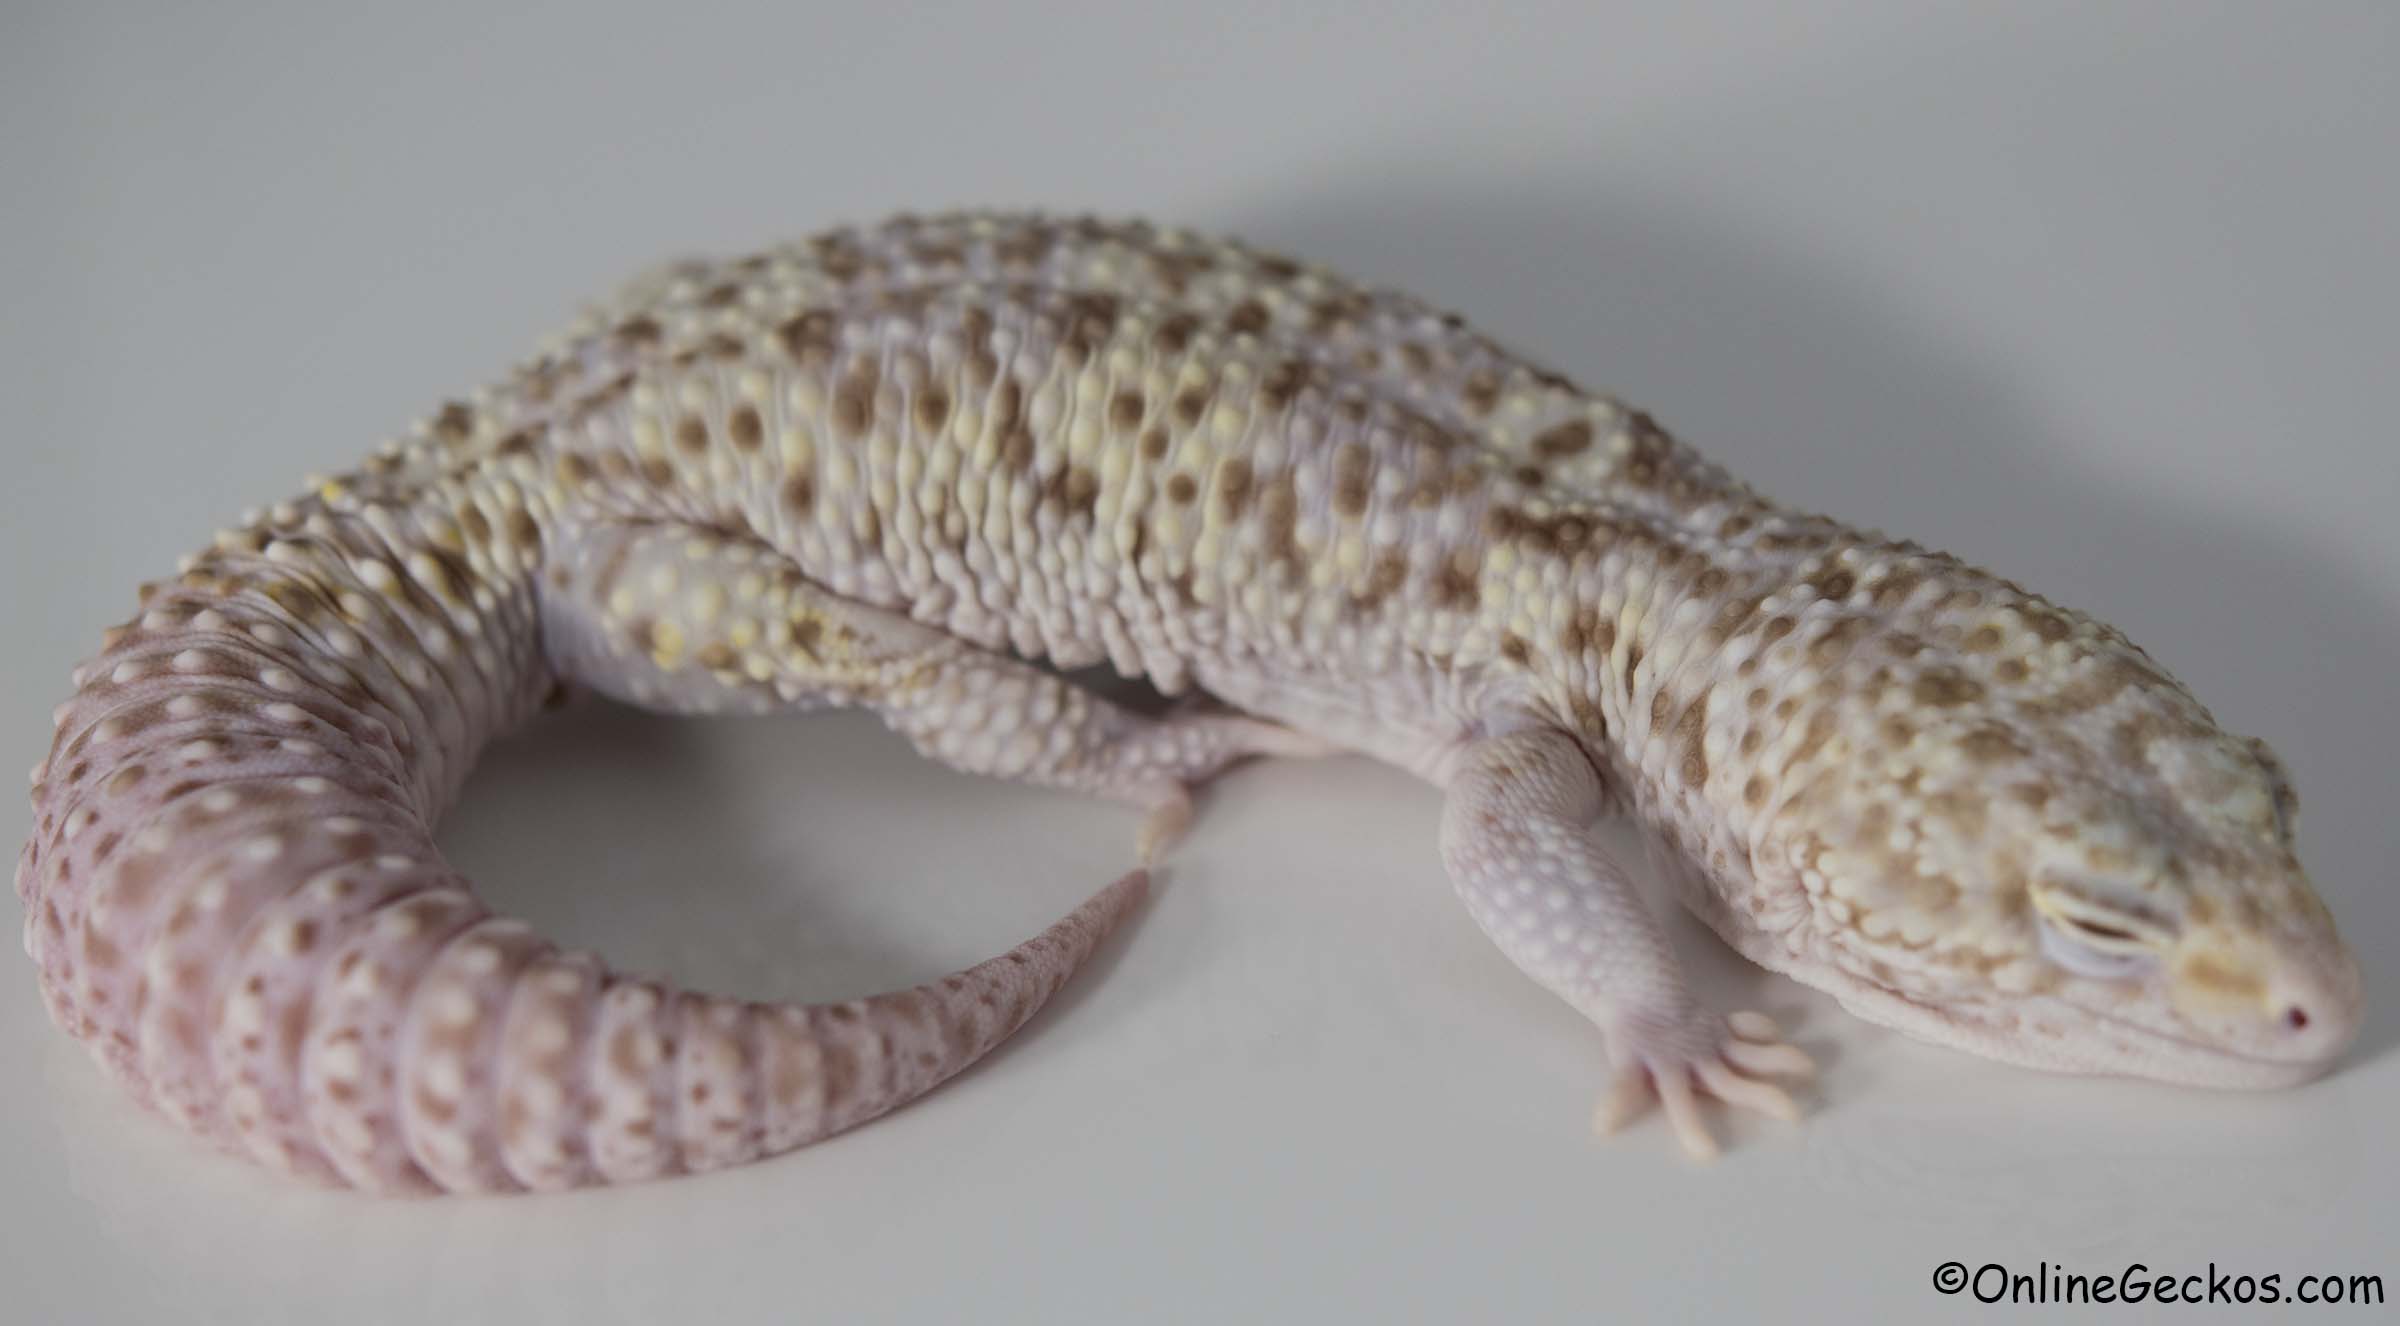 leopard gecko for sale mack snow radar male